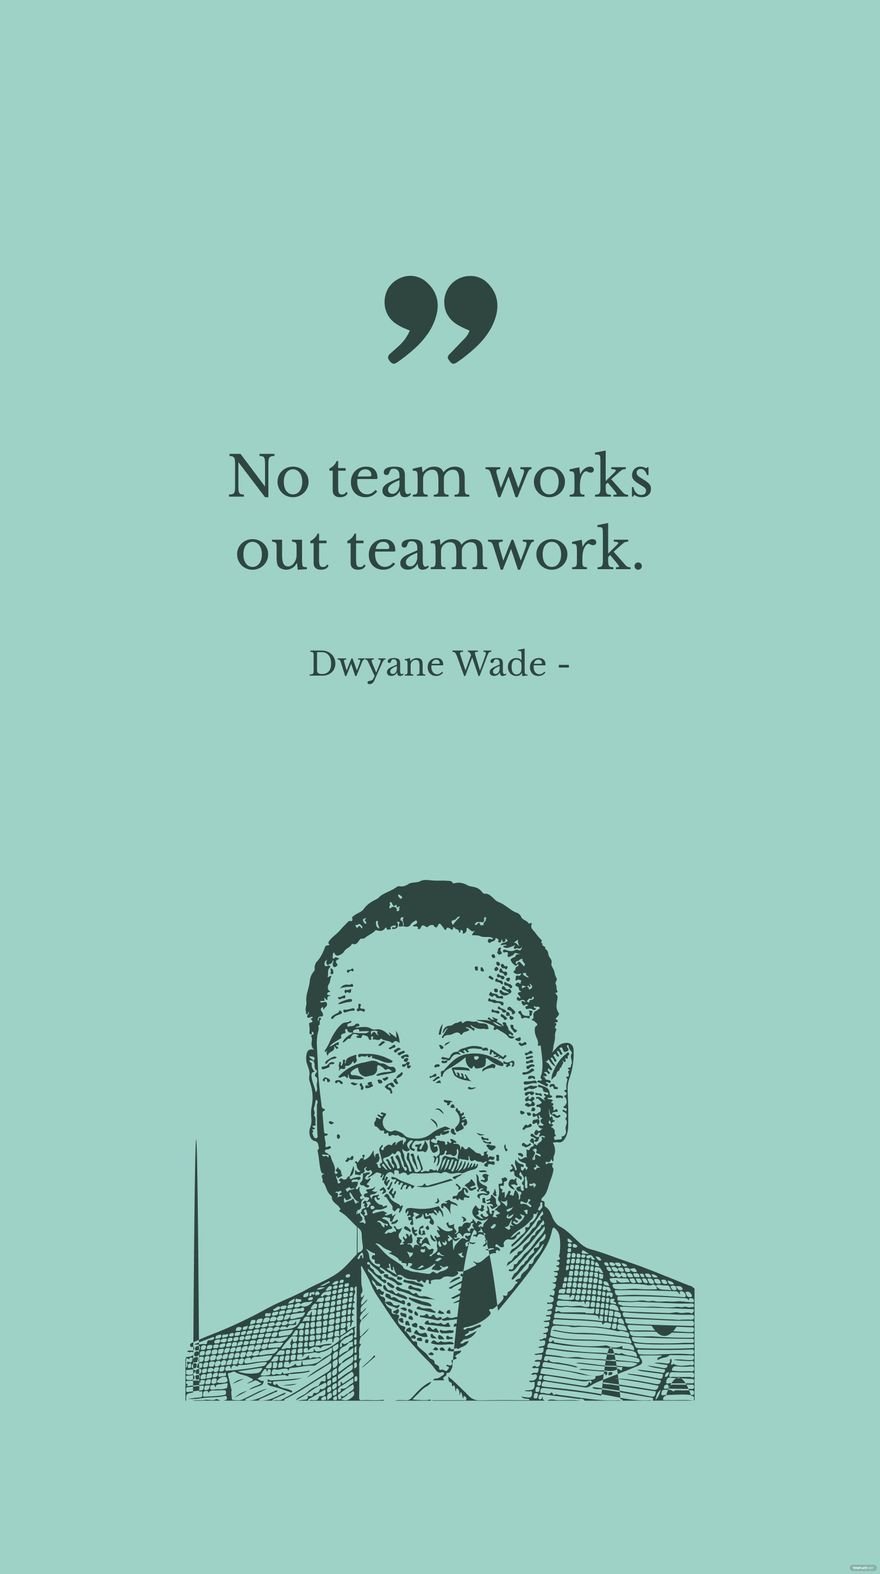 Free Dwyane Wade - No team works out teamwork.